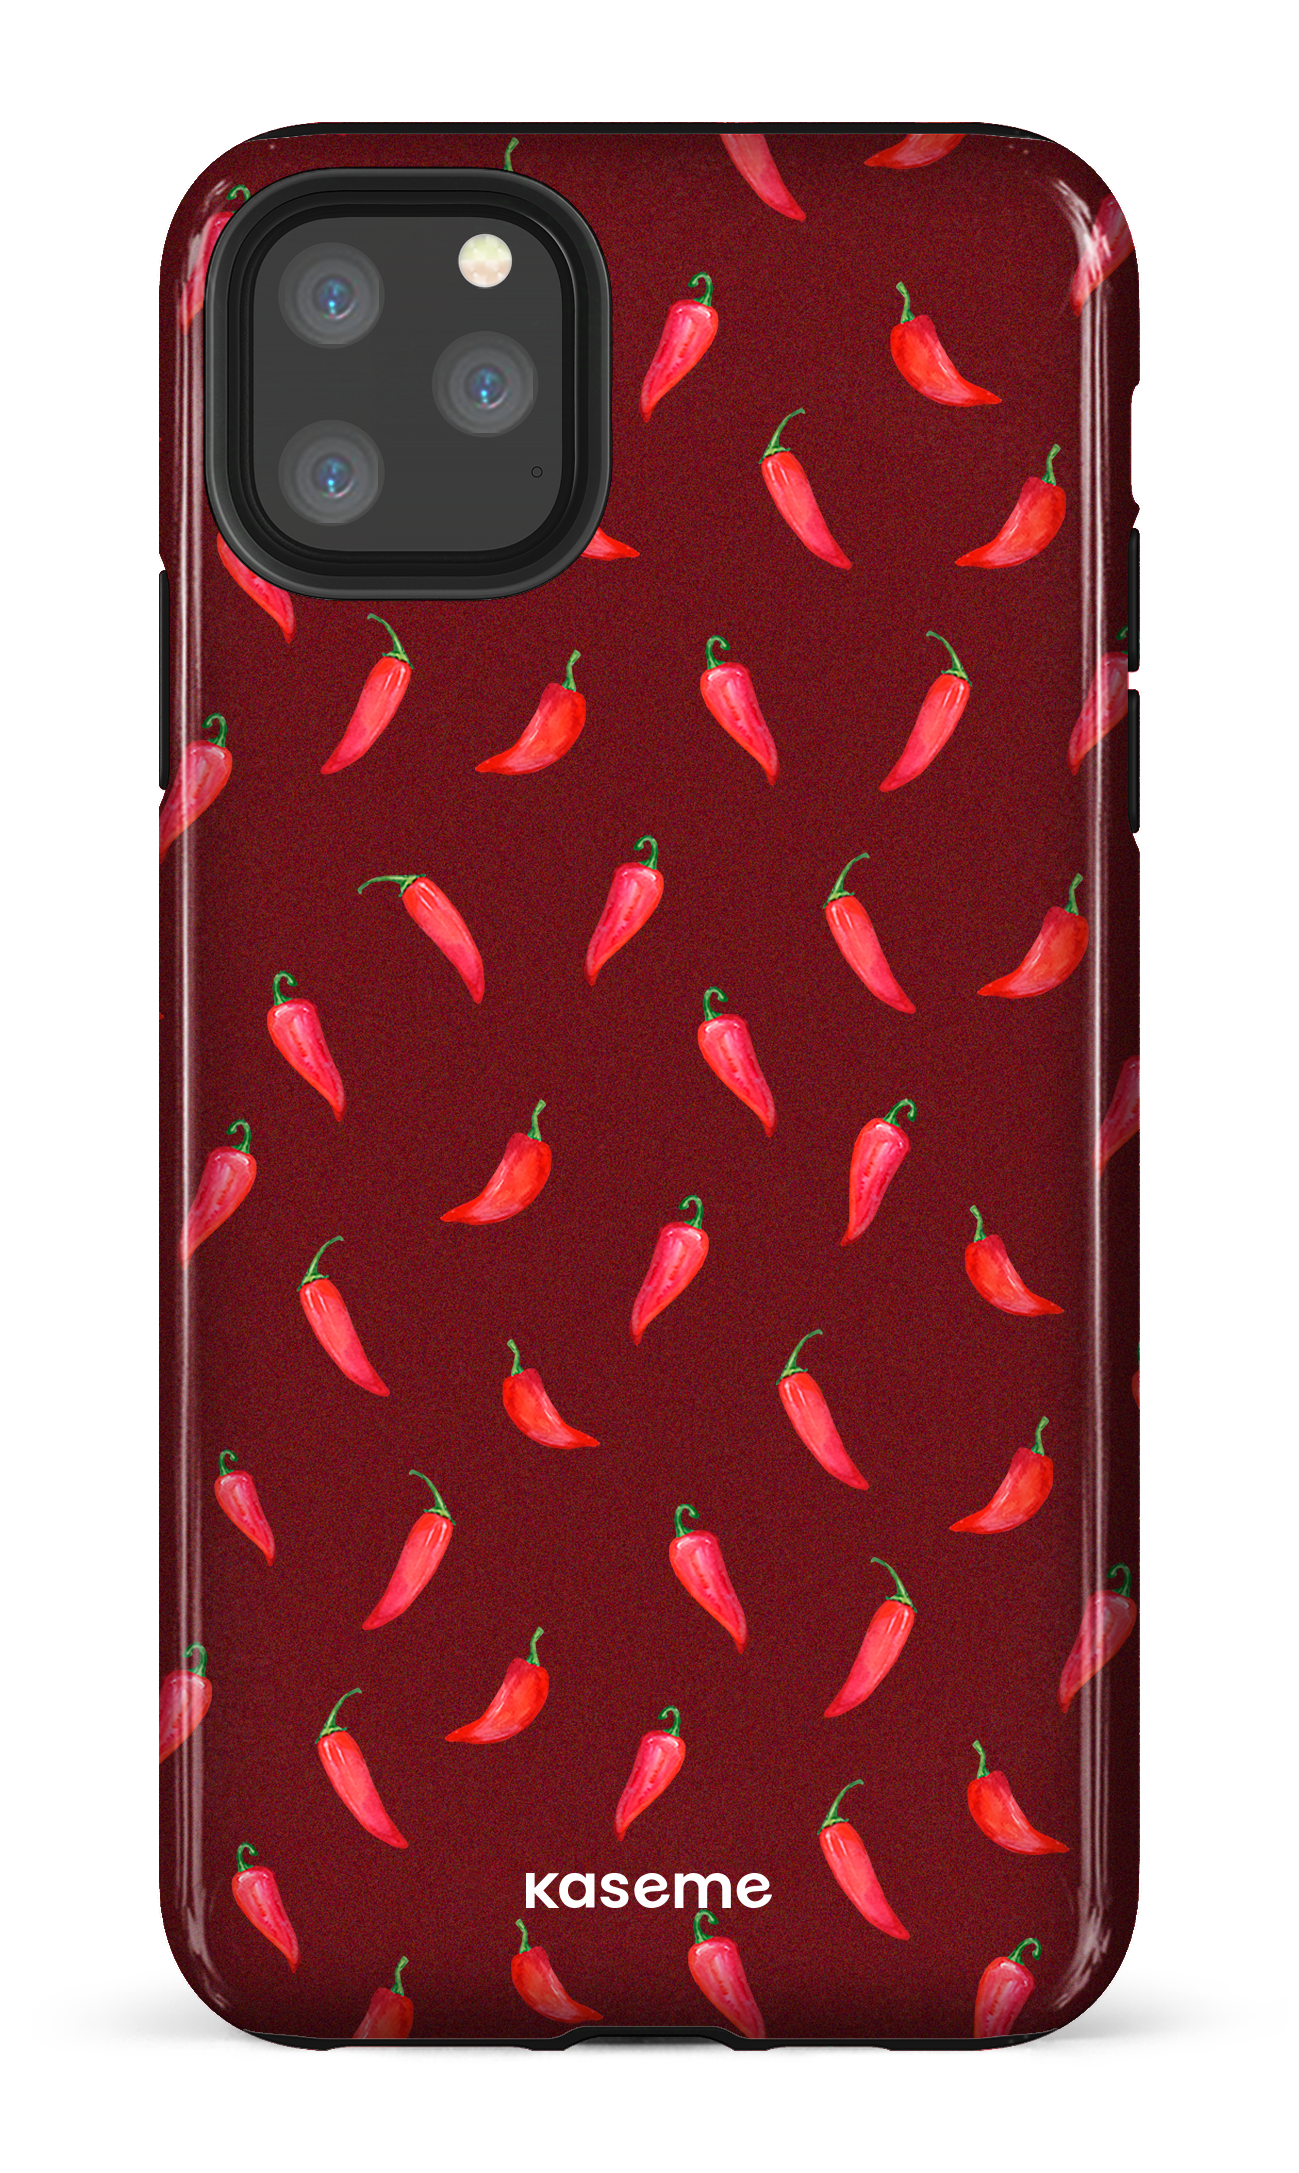 Hottie Red - iPhone 11 Pro Max